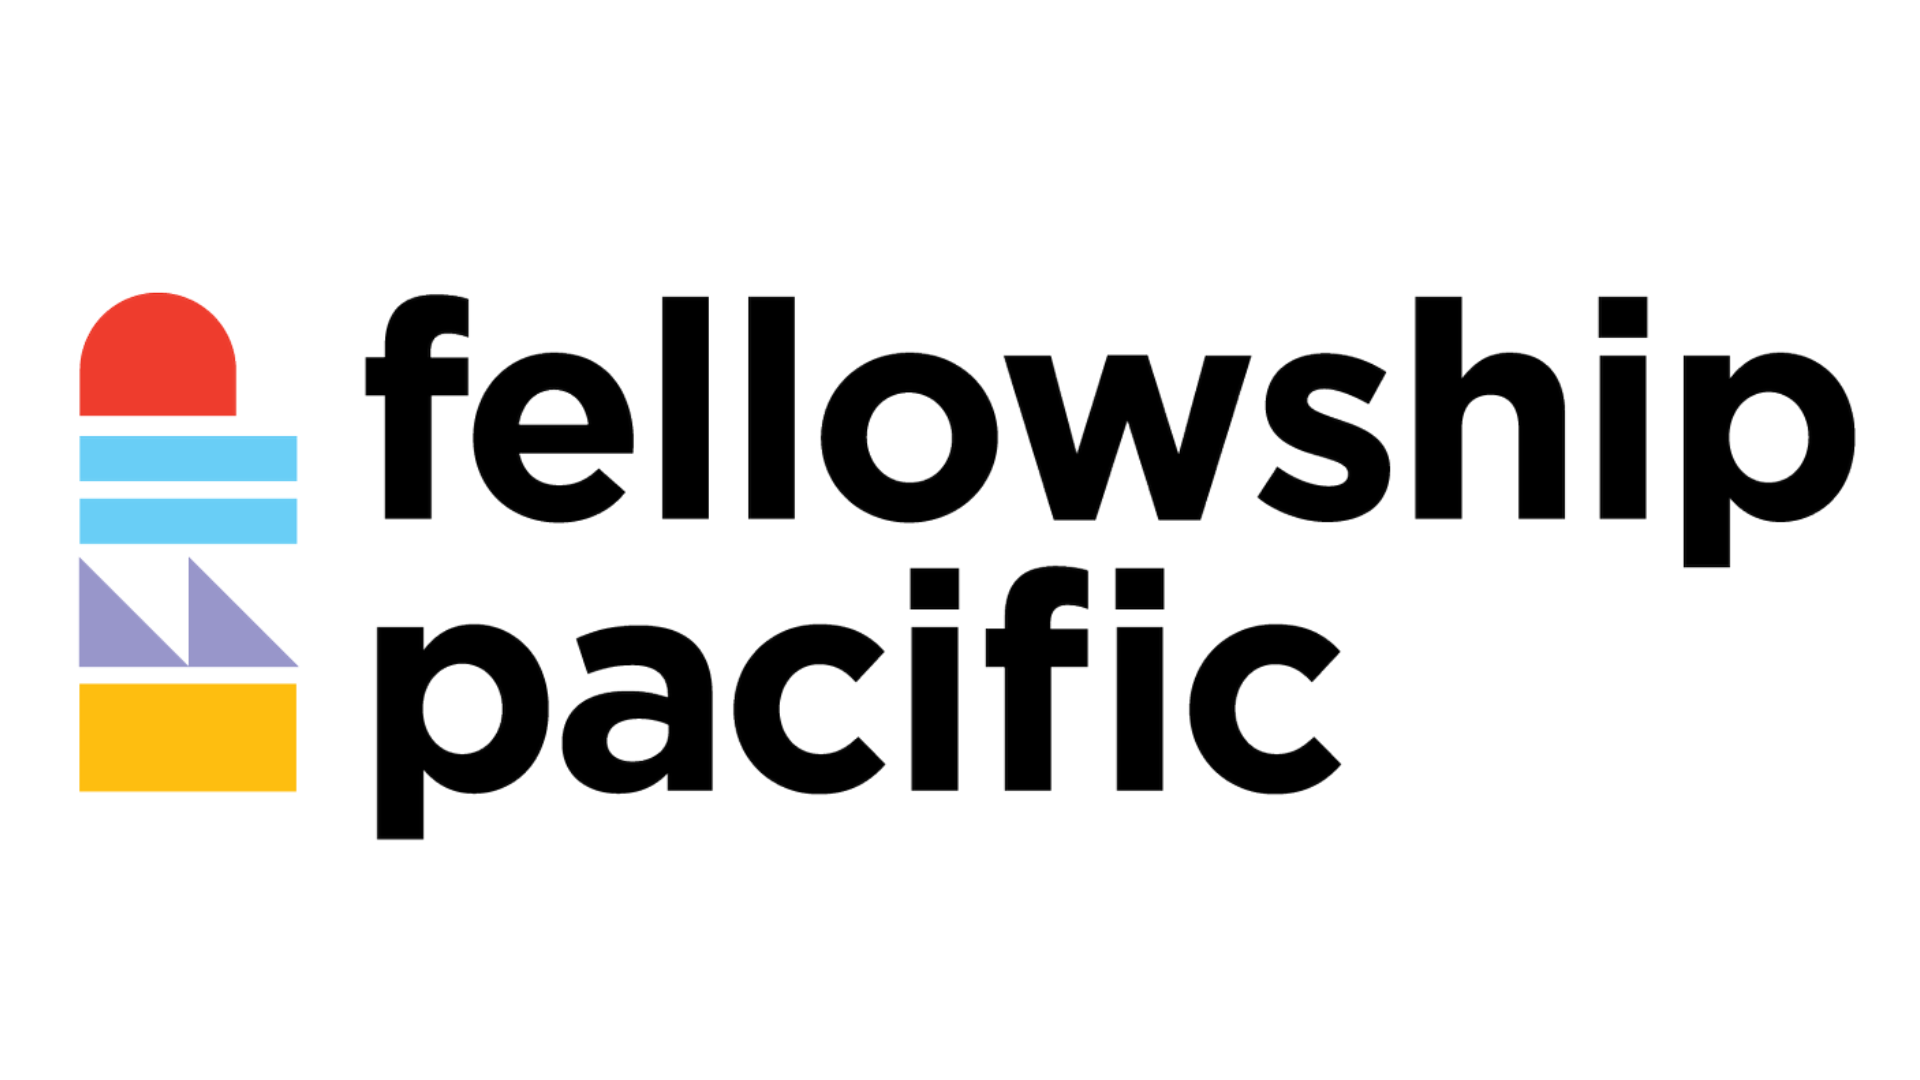 Fellowship Pacific